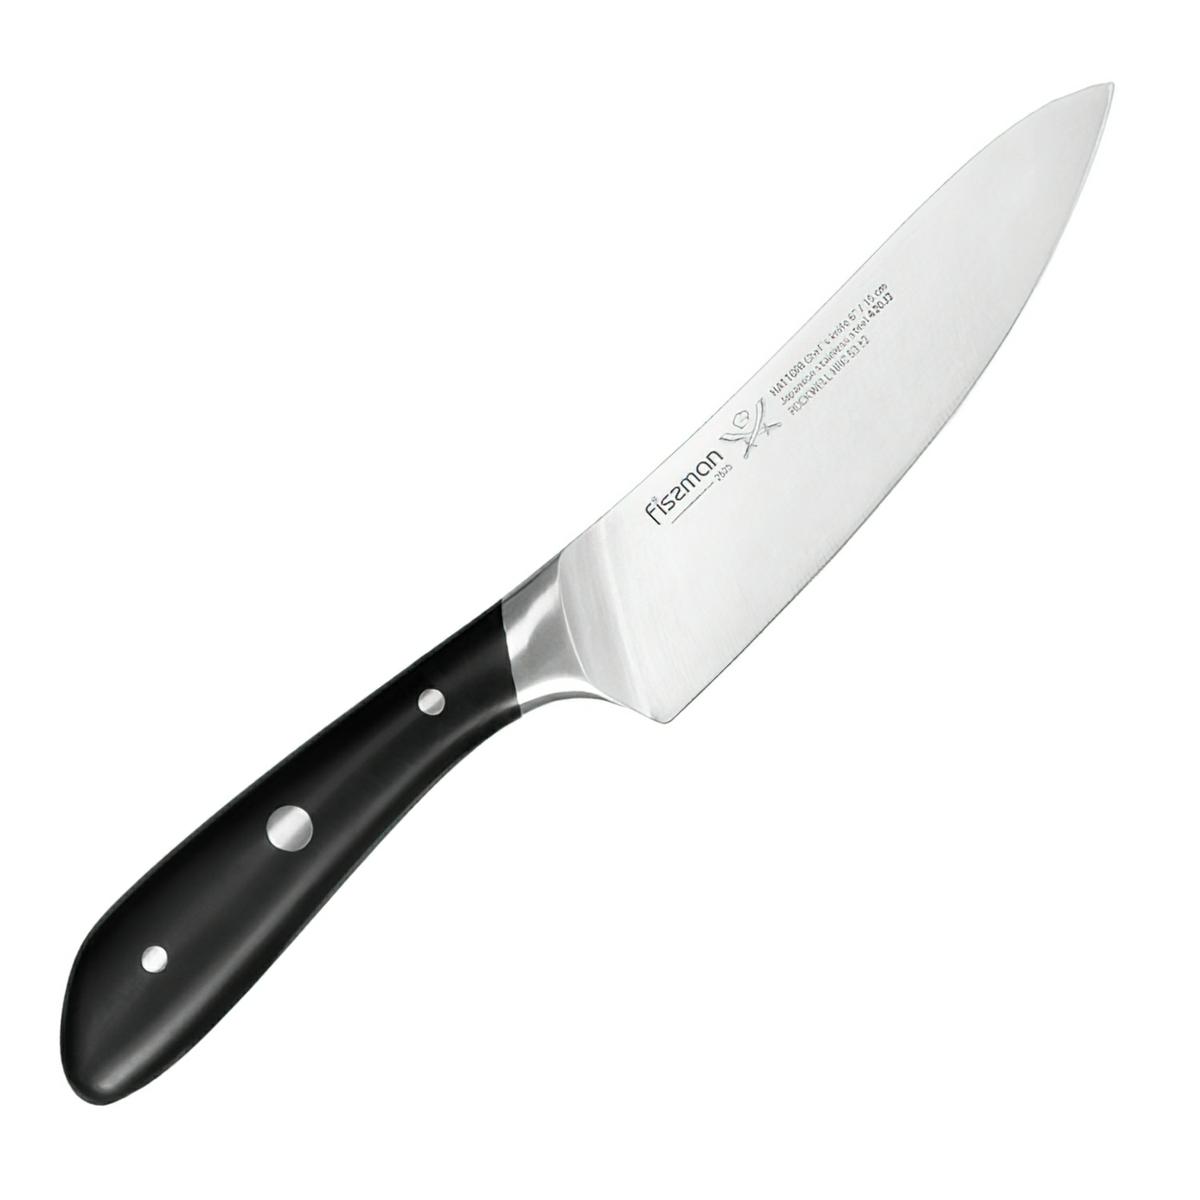 Fissman Hattori nóż kuchenny mały szef kuchni 16cm